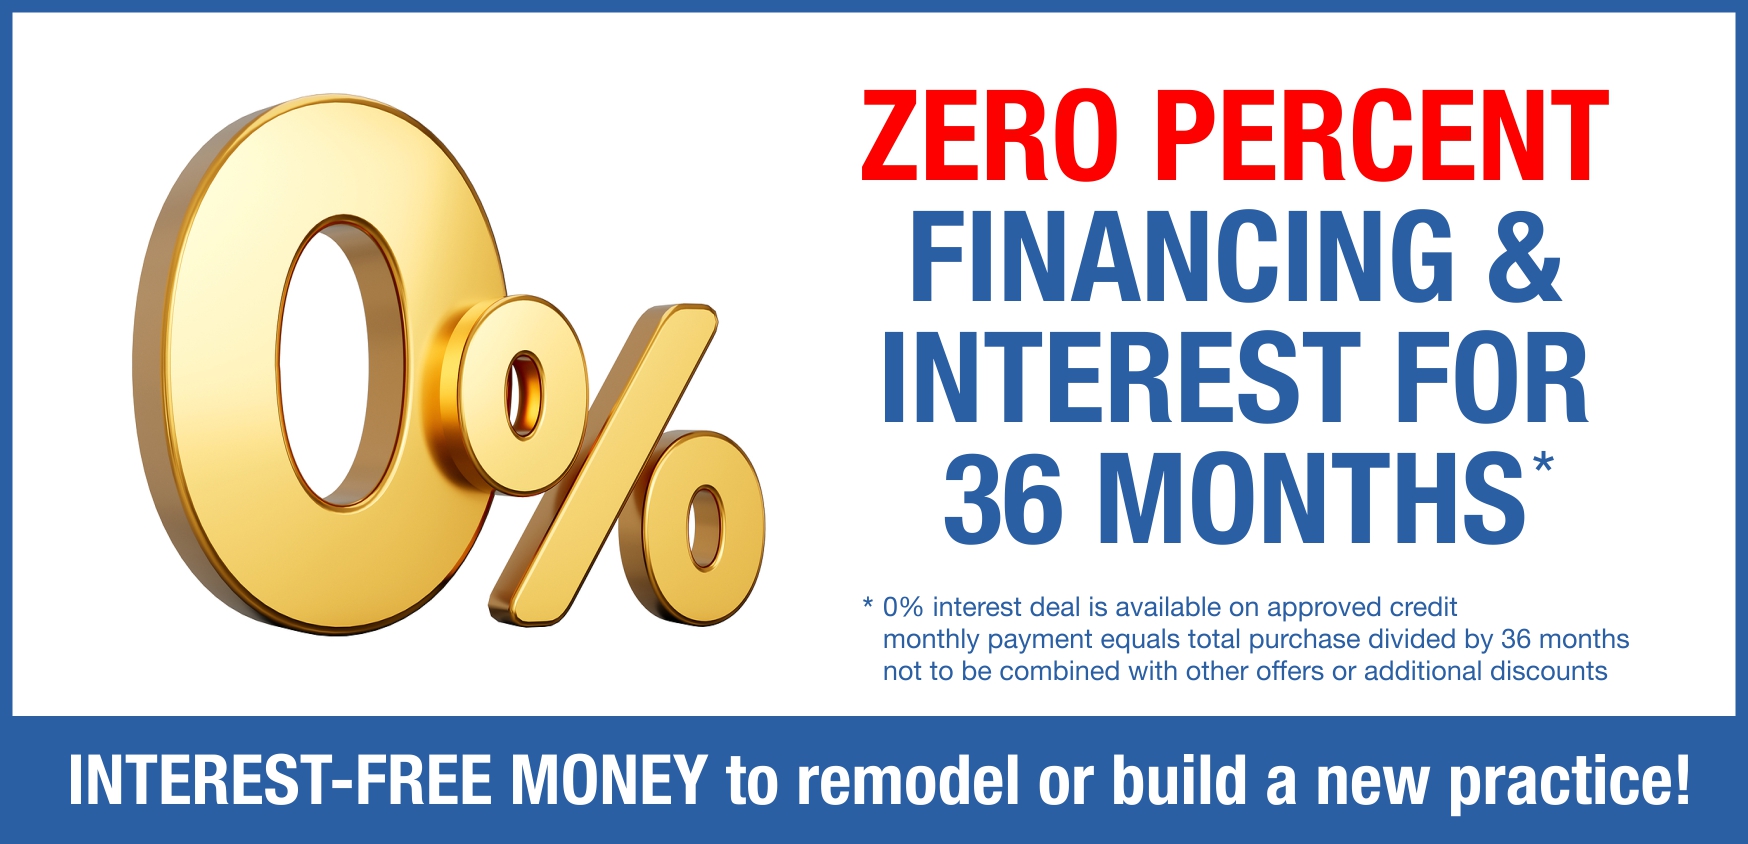 Zero Percent Financing & Interest for 36 Months